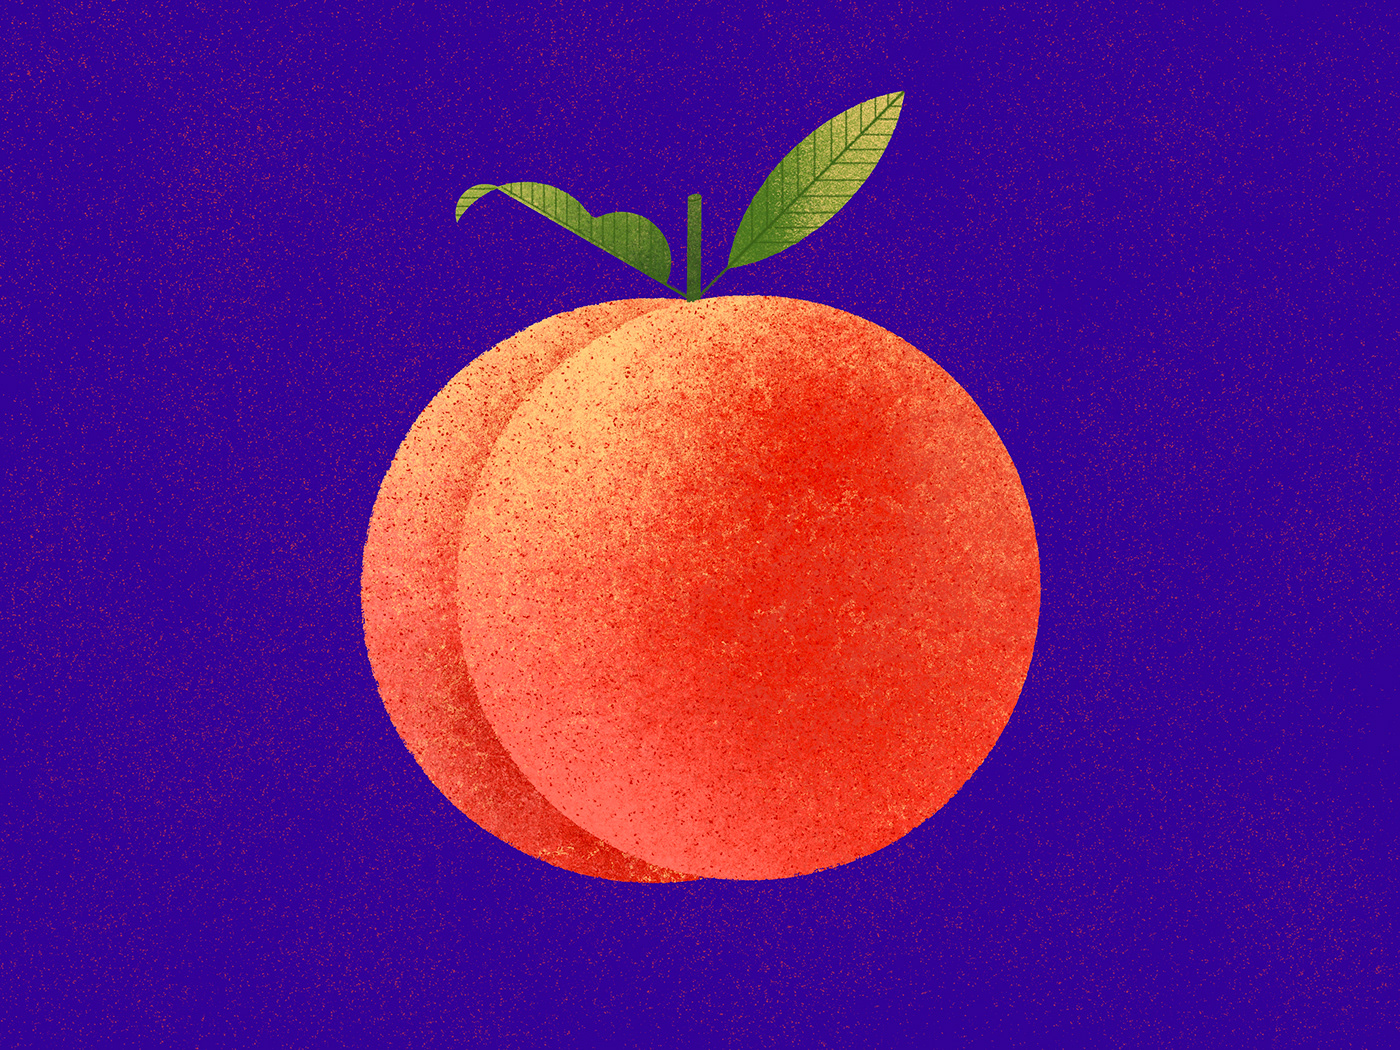 Colorful textured peach illustration. Stylized geometric peach.